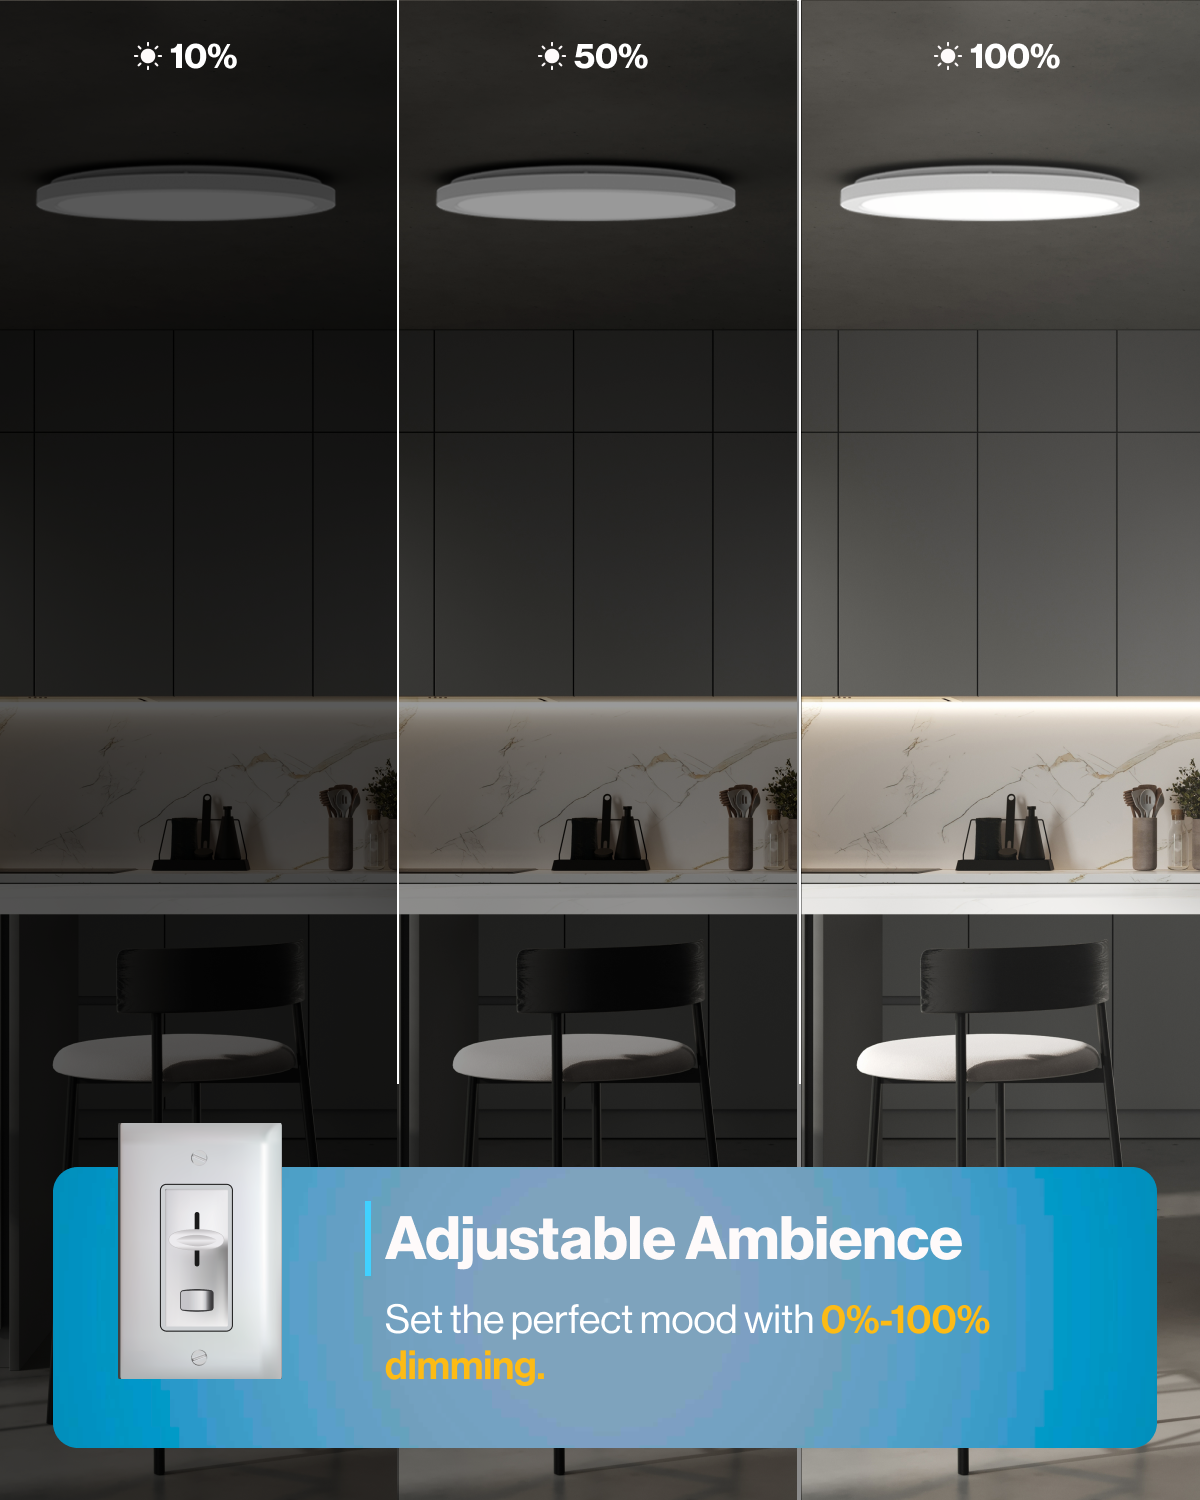 Sunco Lighting 13" Selectable White Ceiling Light Seamless Dimming Capabilities 0%-100%